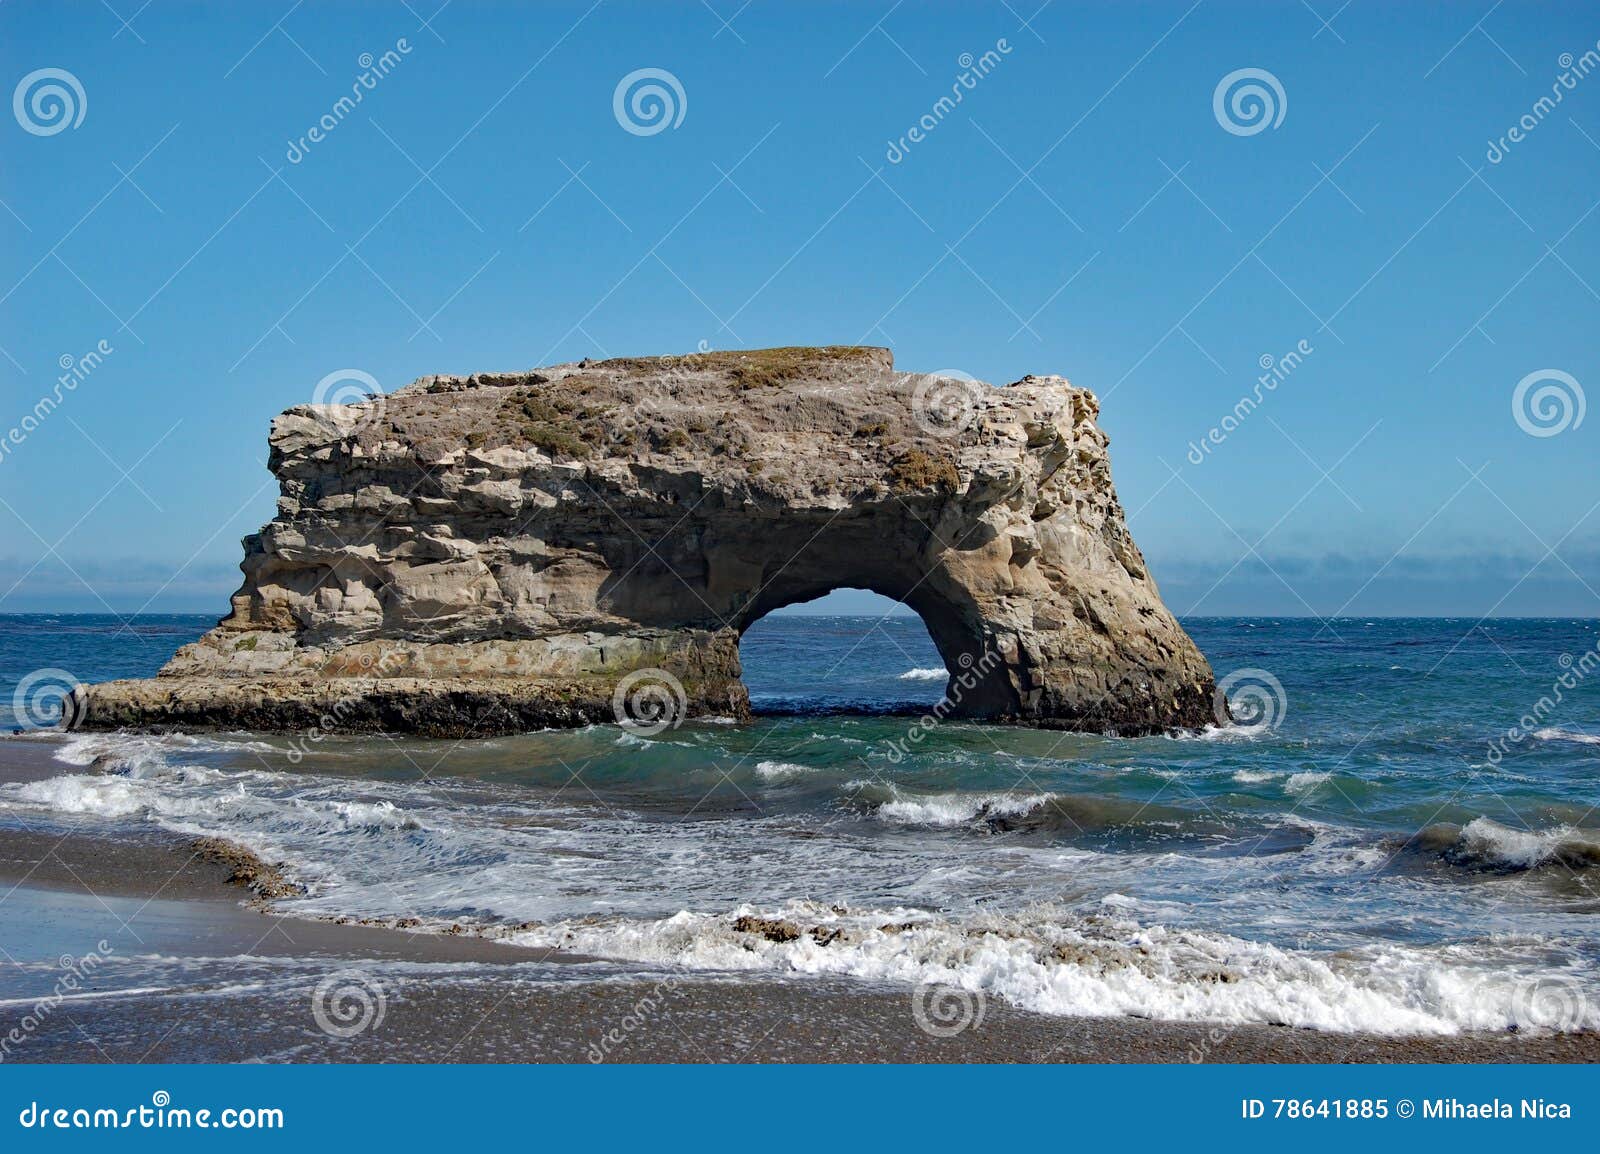 natural bridges state beach, santa cruz, california